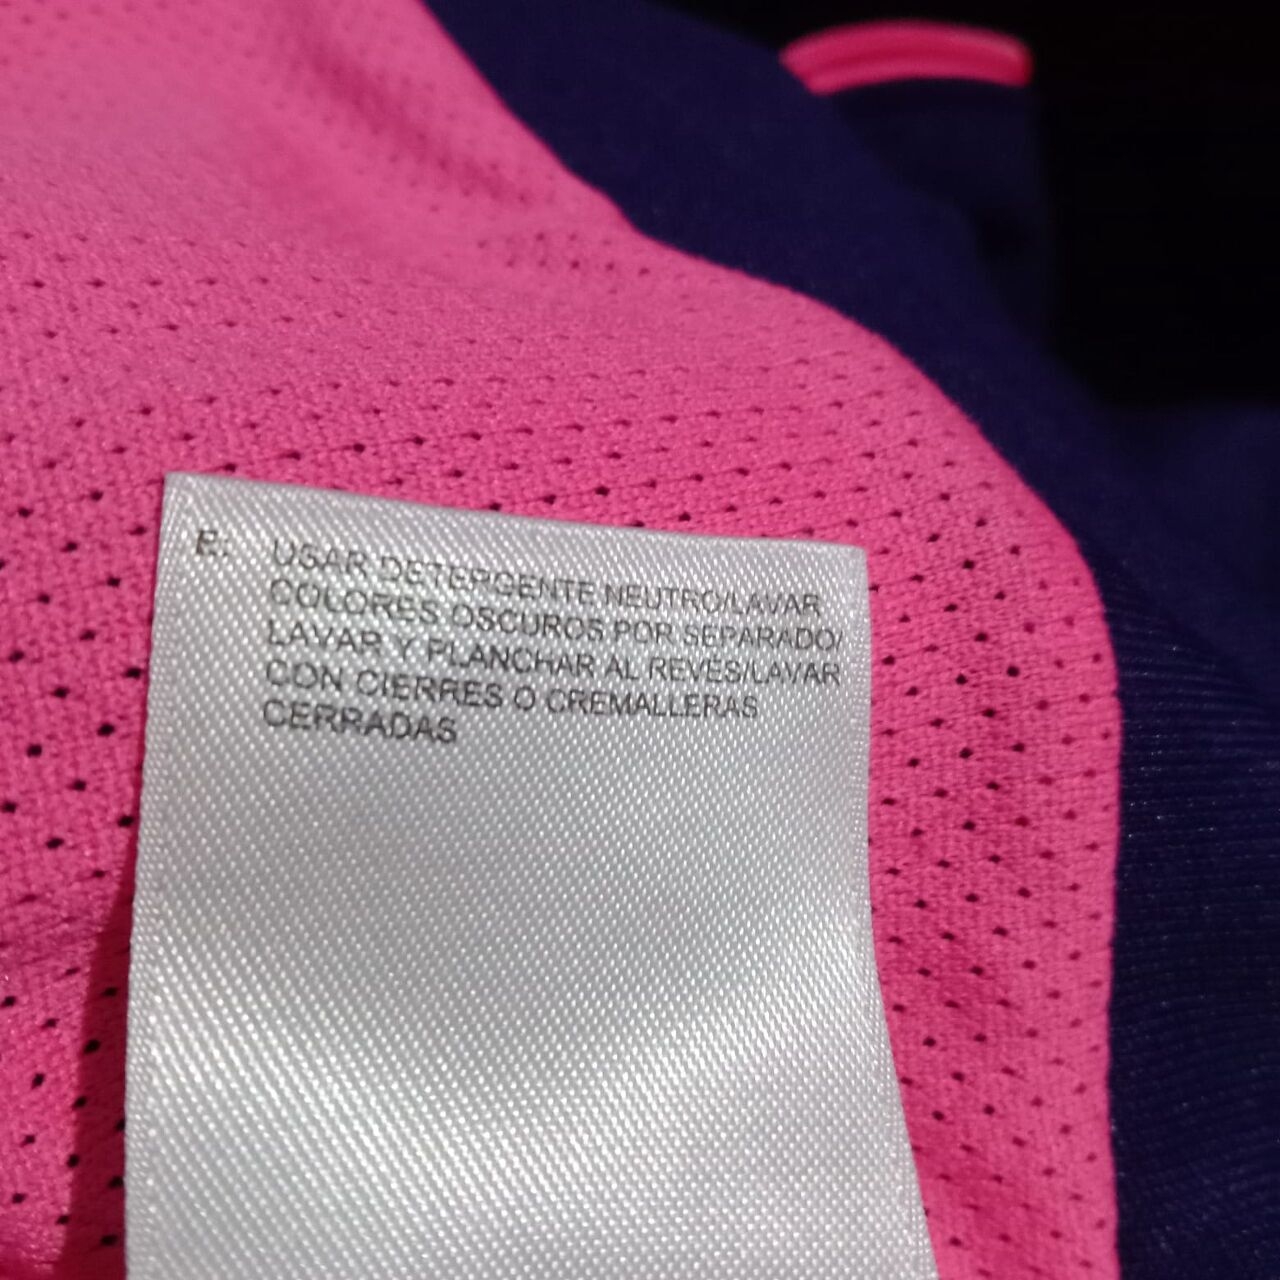 Adidas Purple Zip Up Track Jacket